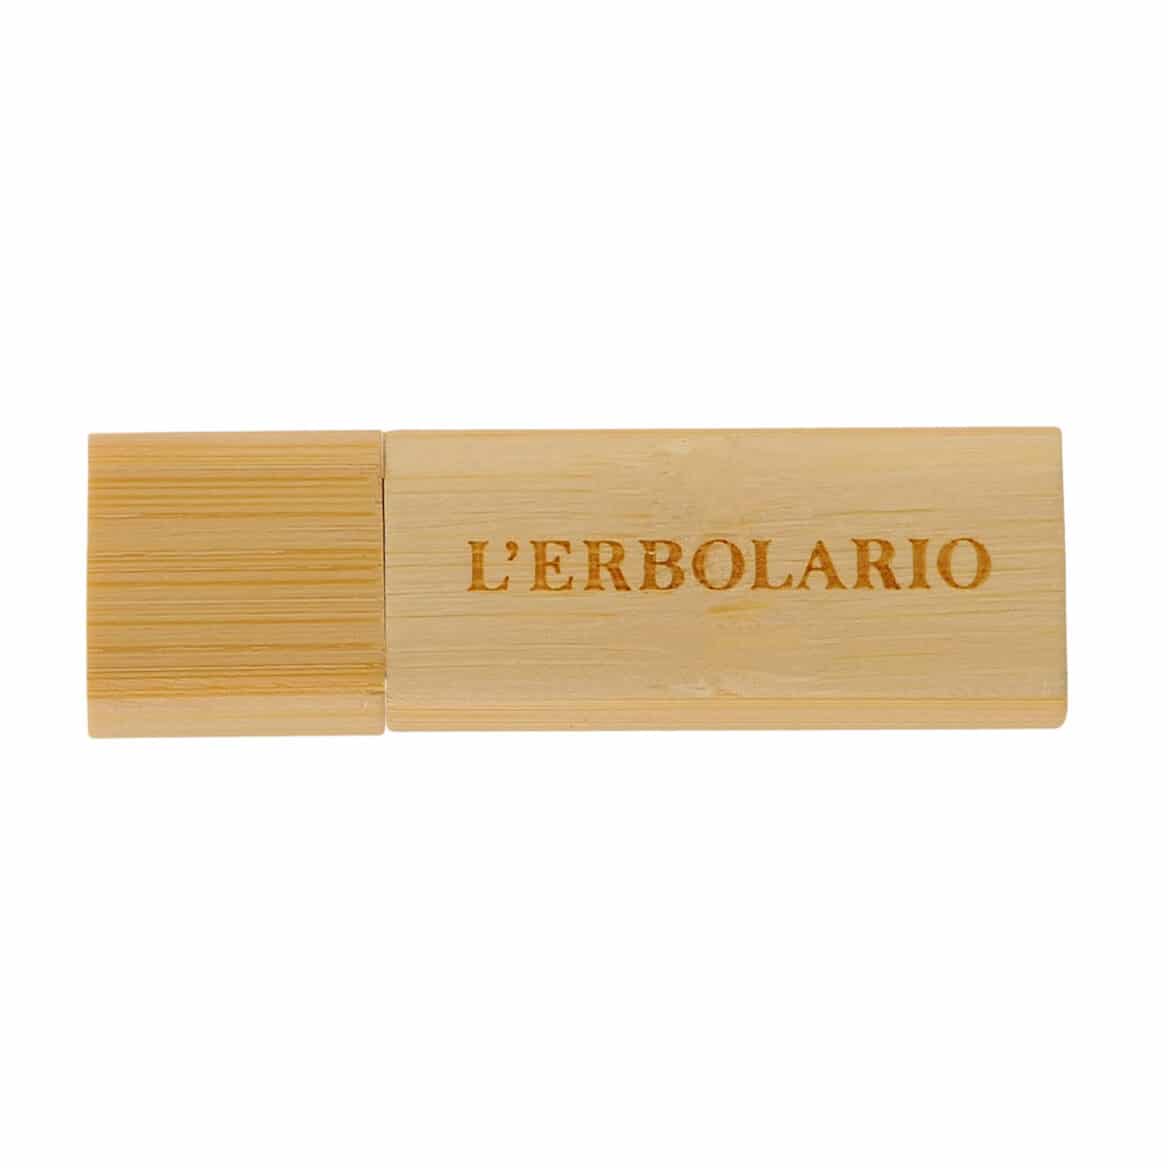 Usb legno logo Erbolario